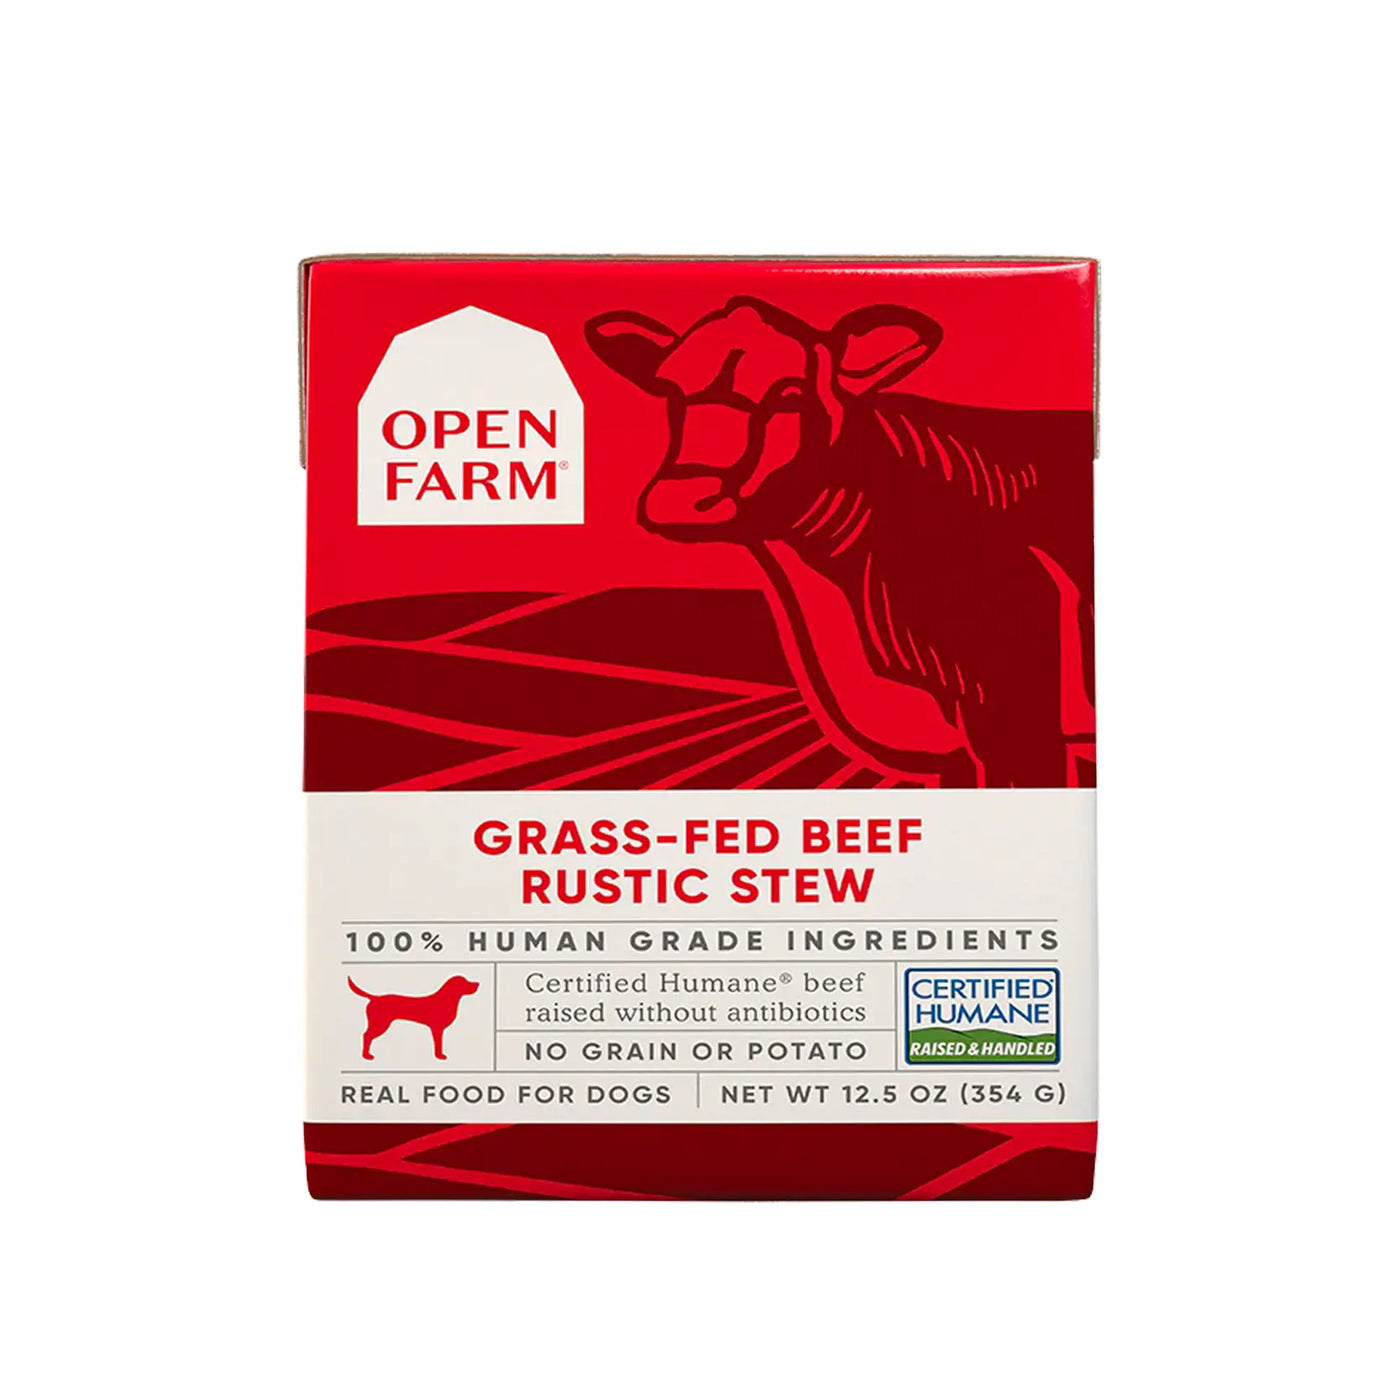 Open Farm Rustic Stew Wet Dog Food Grass-Fed Beef 12.5oz